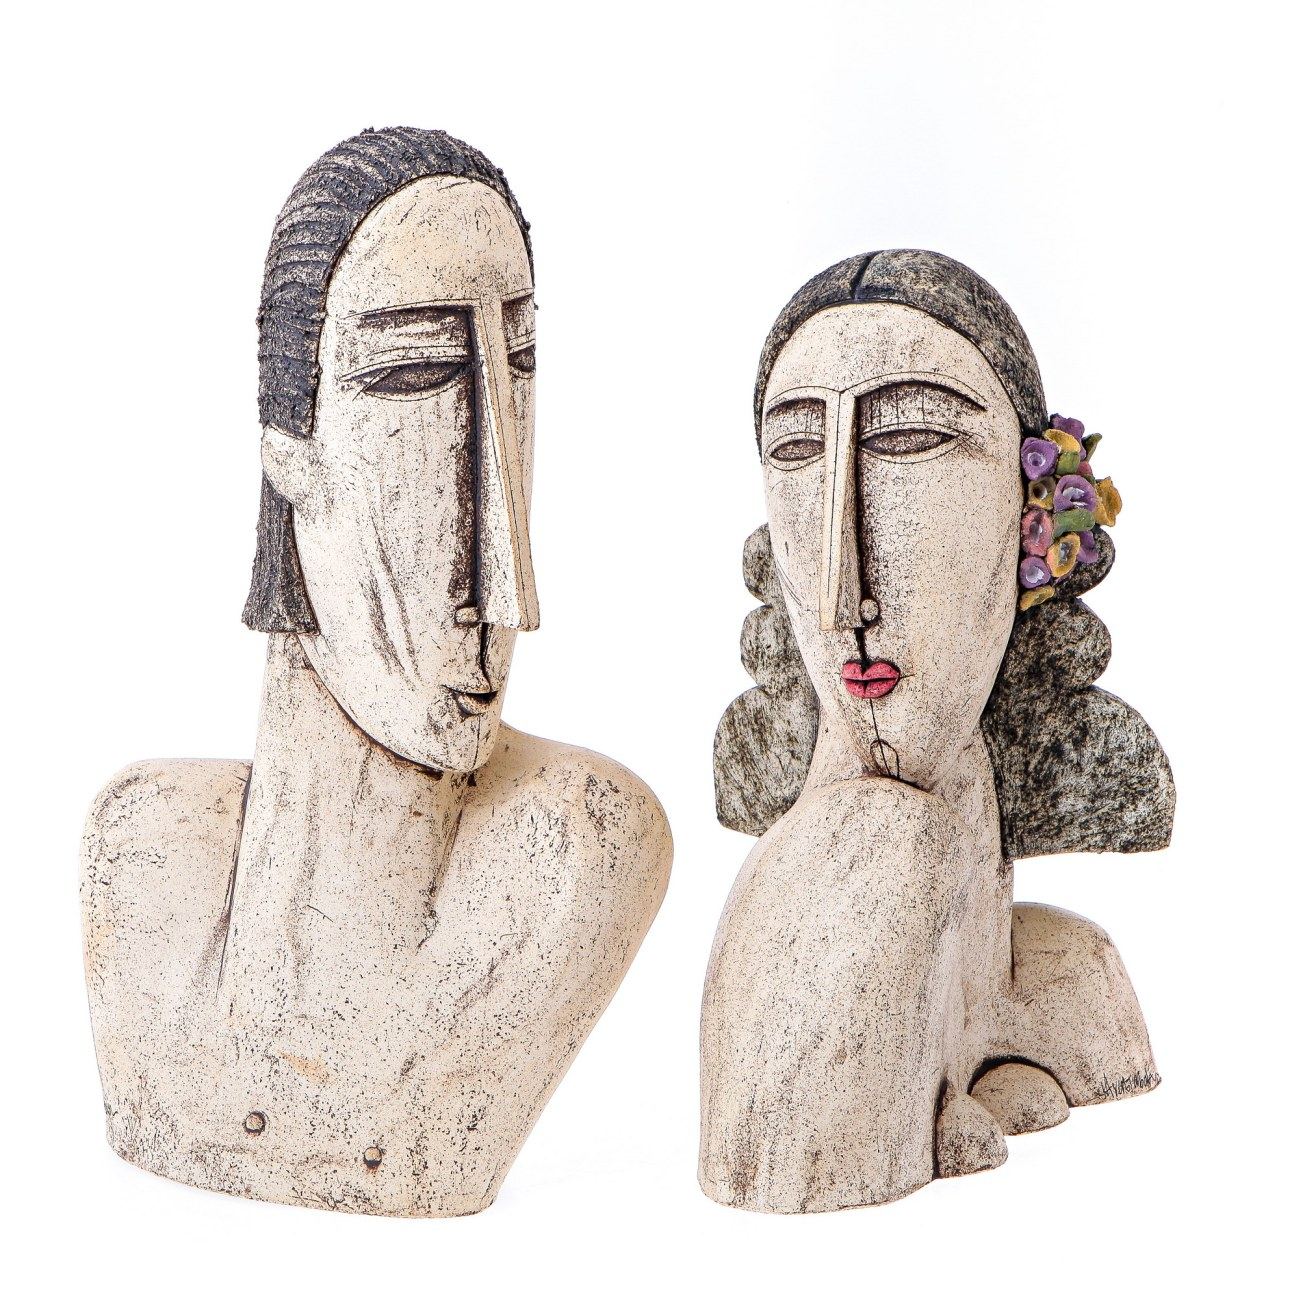 Head Bust Male Sculpture - Fernando / Handmade Ceramic Art Deco